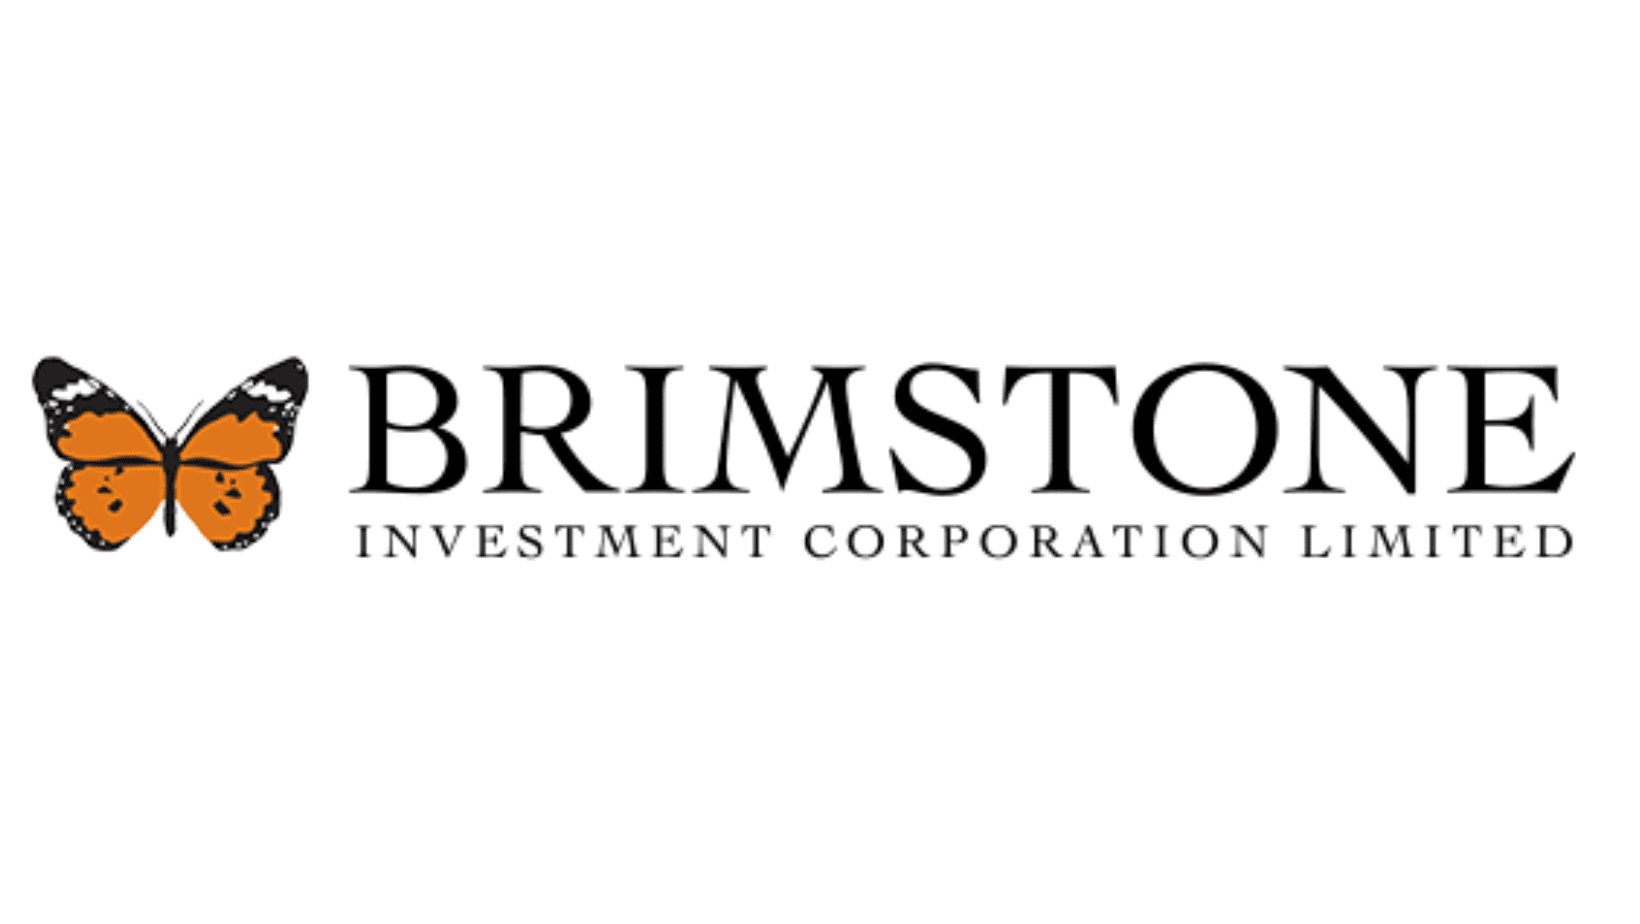 Brimstone Investment Corporation Limited